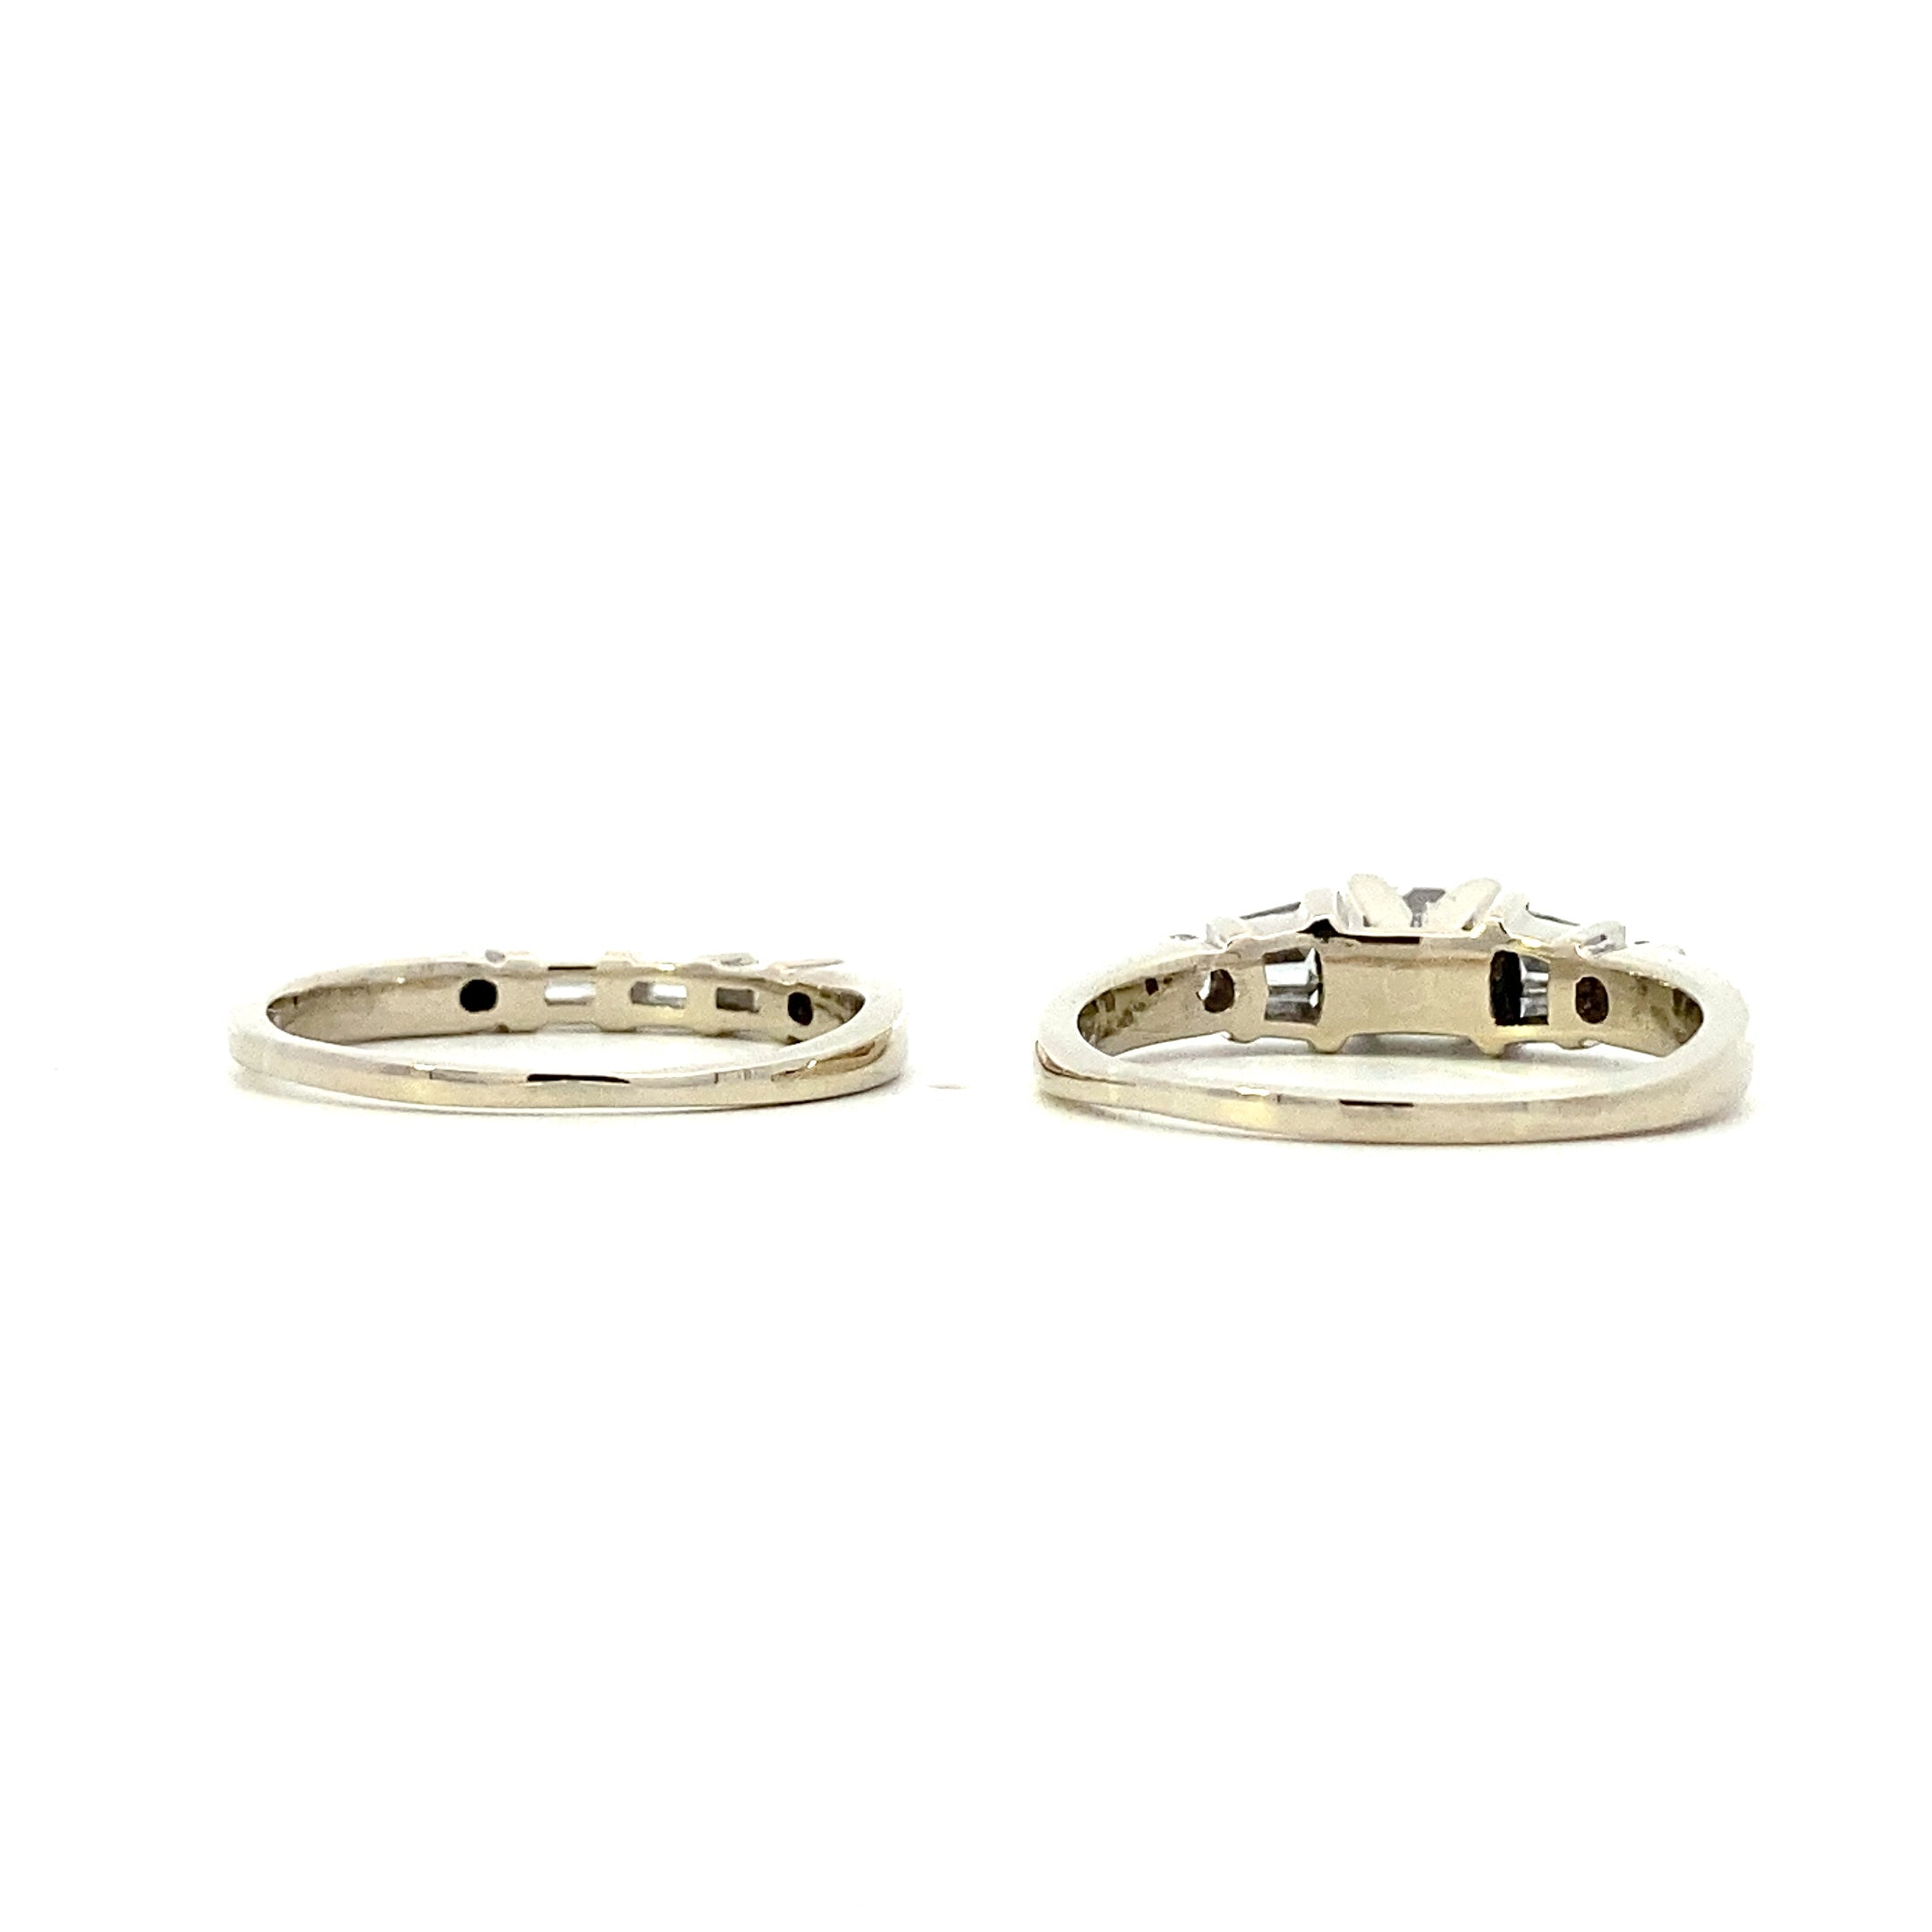 14K White Gold Diamond Engagement & Wedding Ring Set - 0.91 CTTW